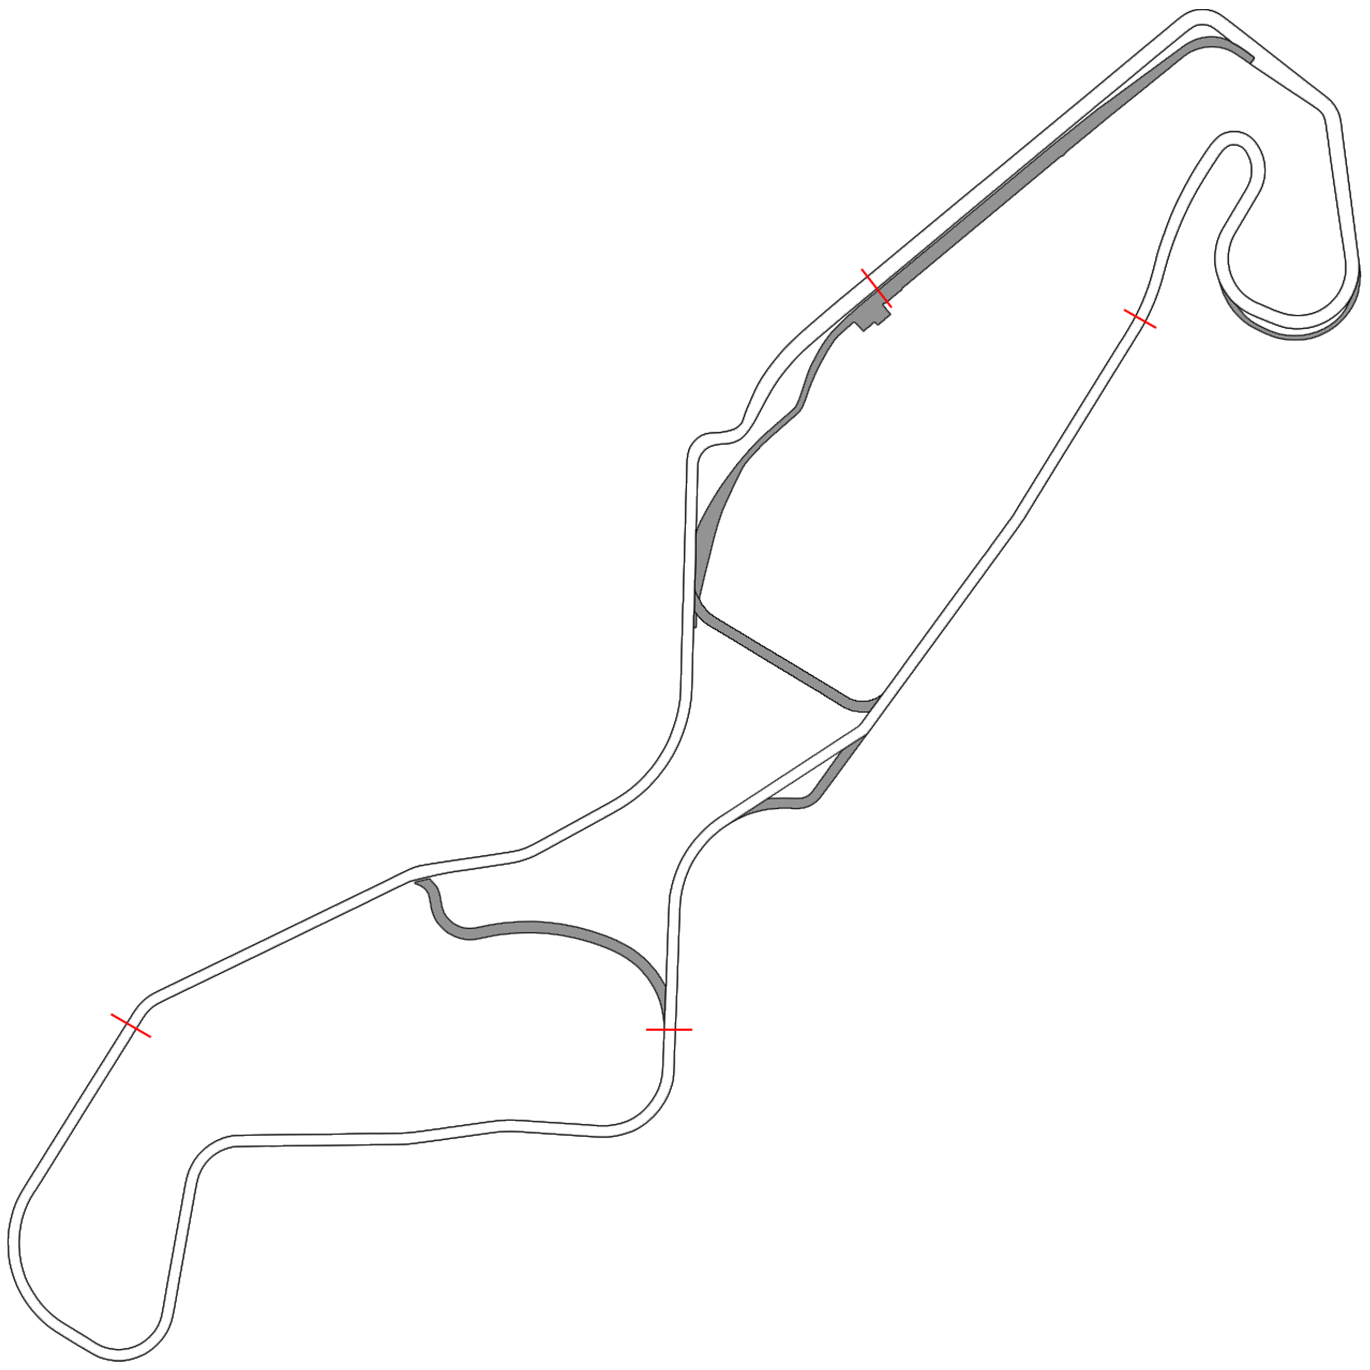 TT Circuit Assen Motorsport